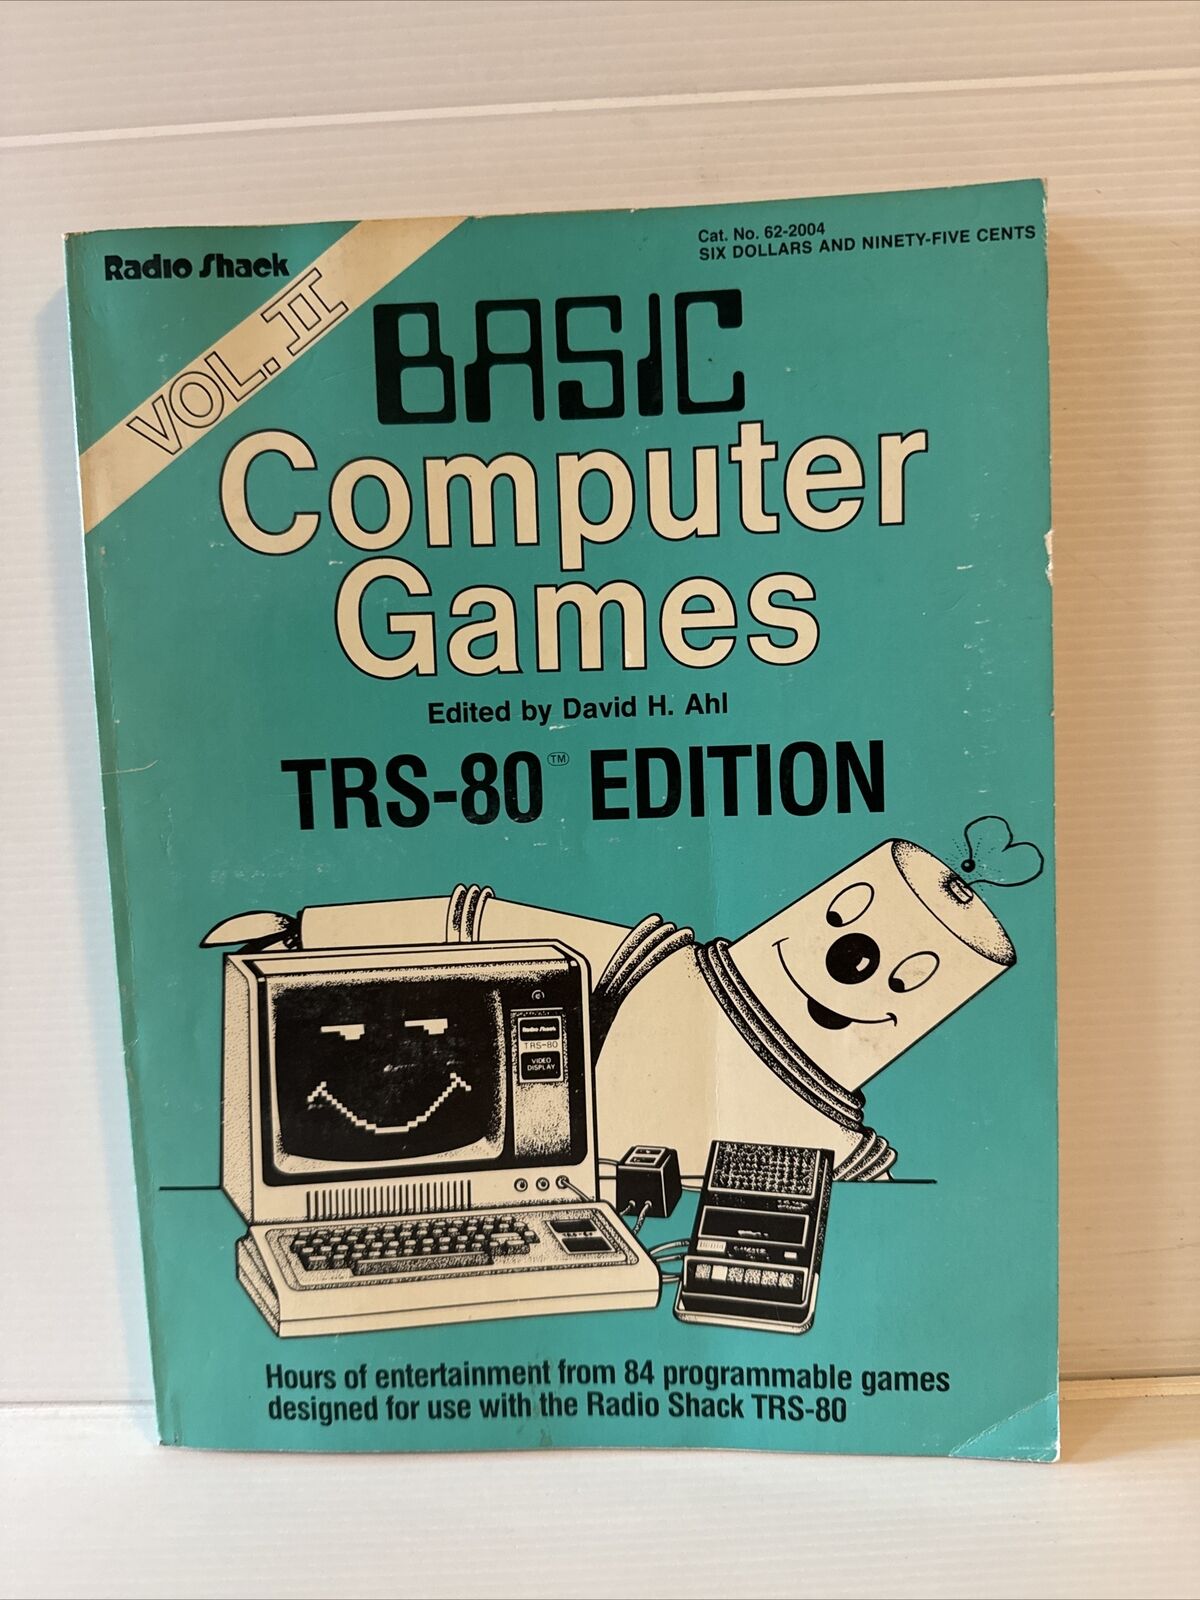 Radio Shack Vol II BASIC Computer Games TRS-80 Edition David H Ahl